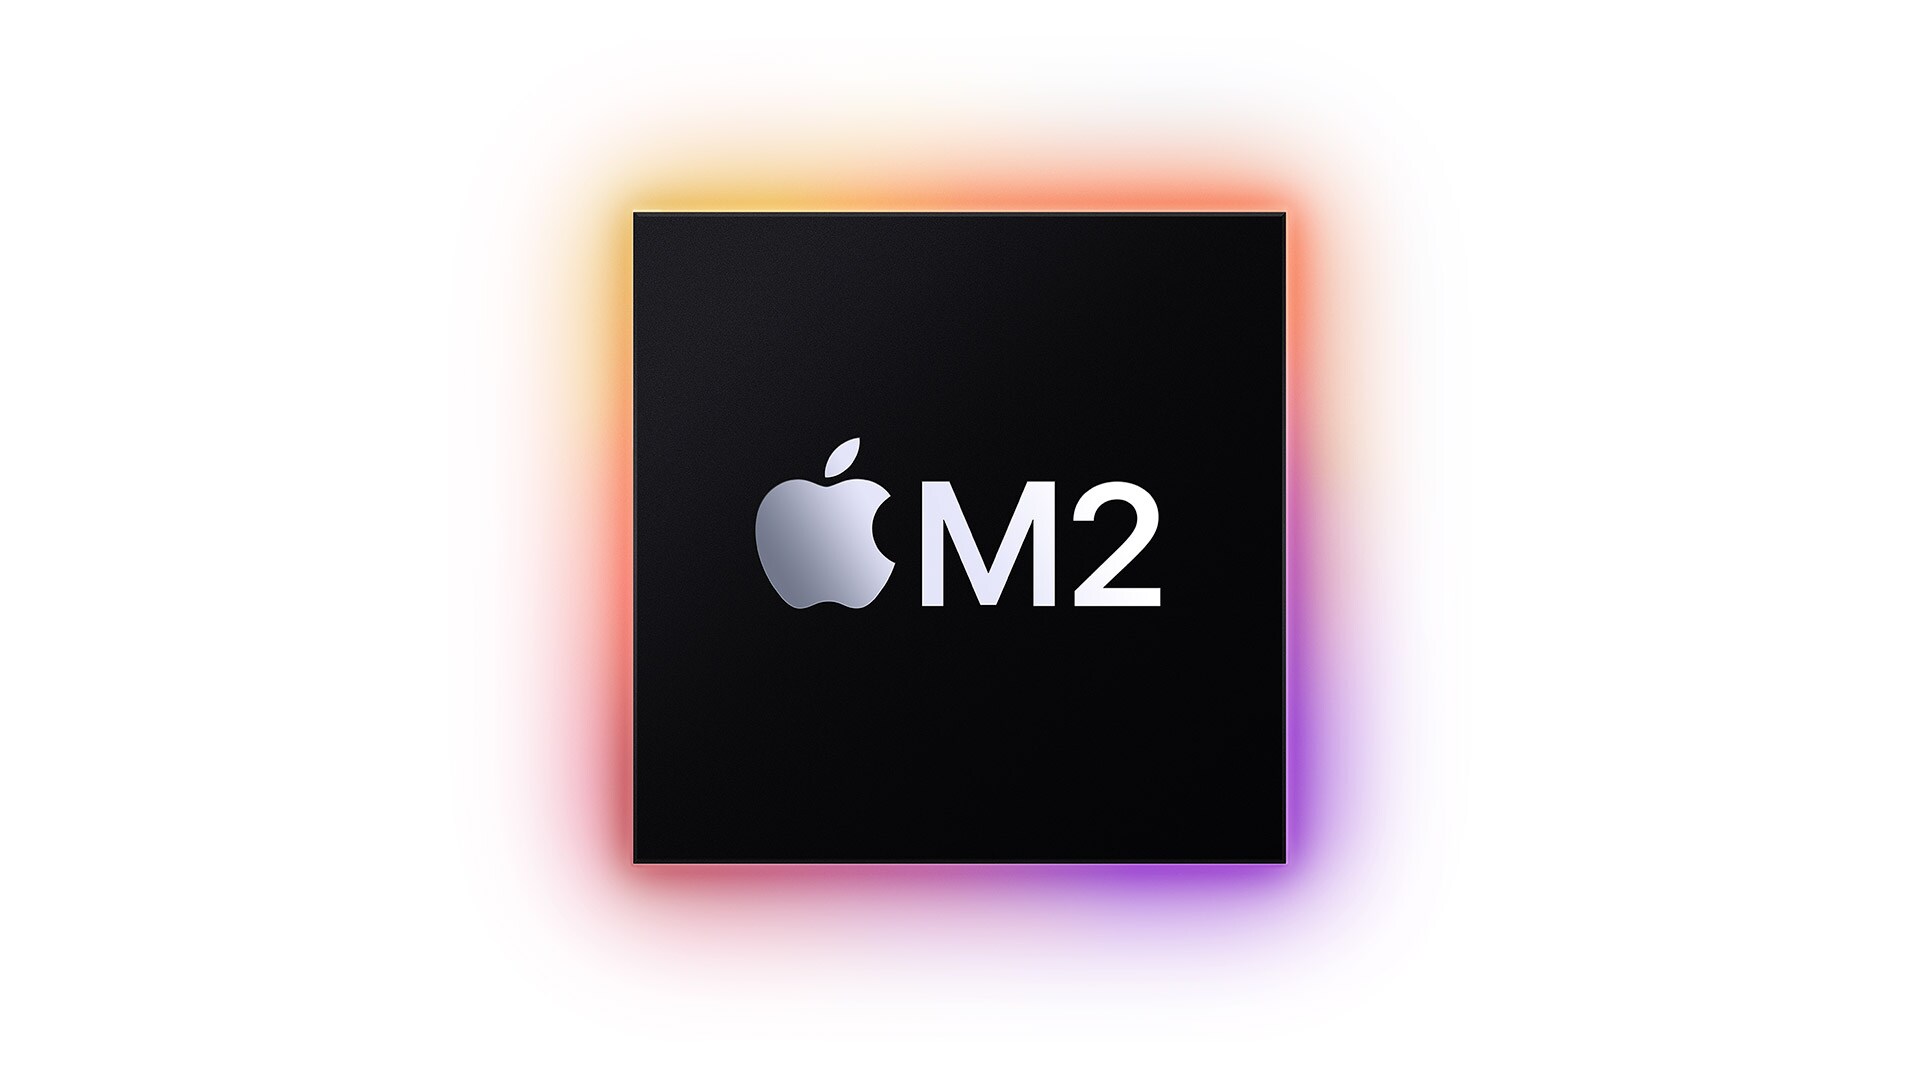 Mac M2 Chip Image